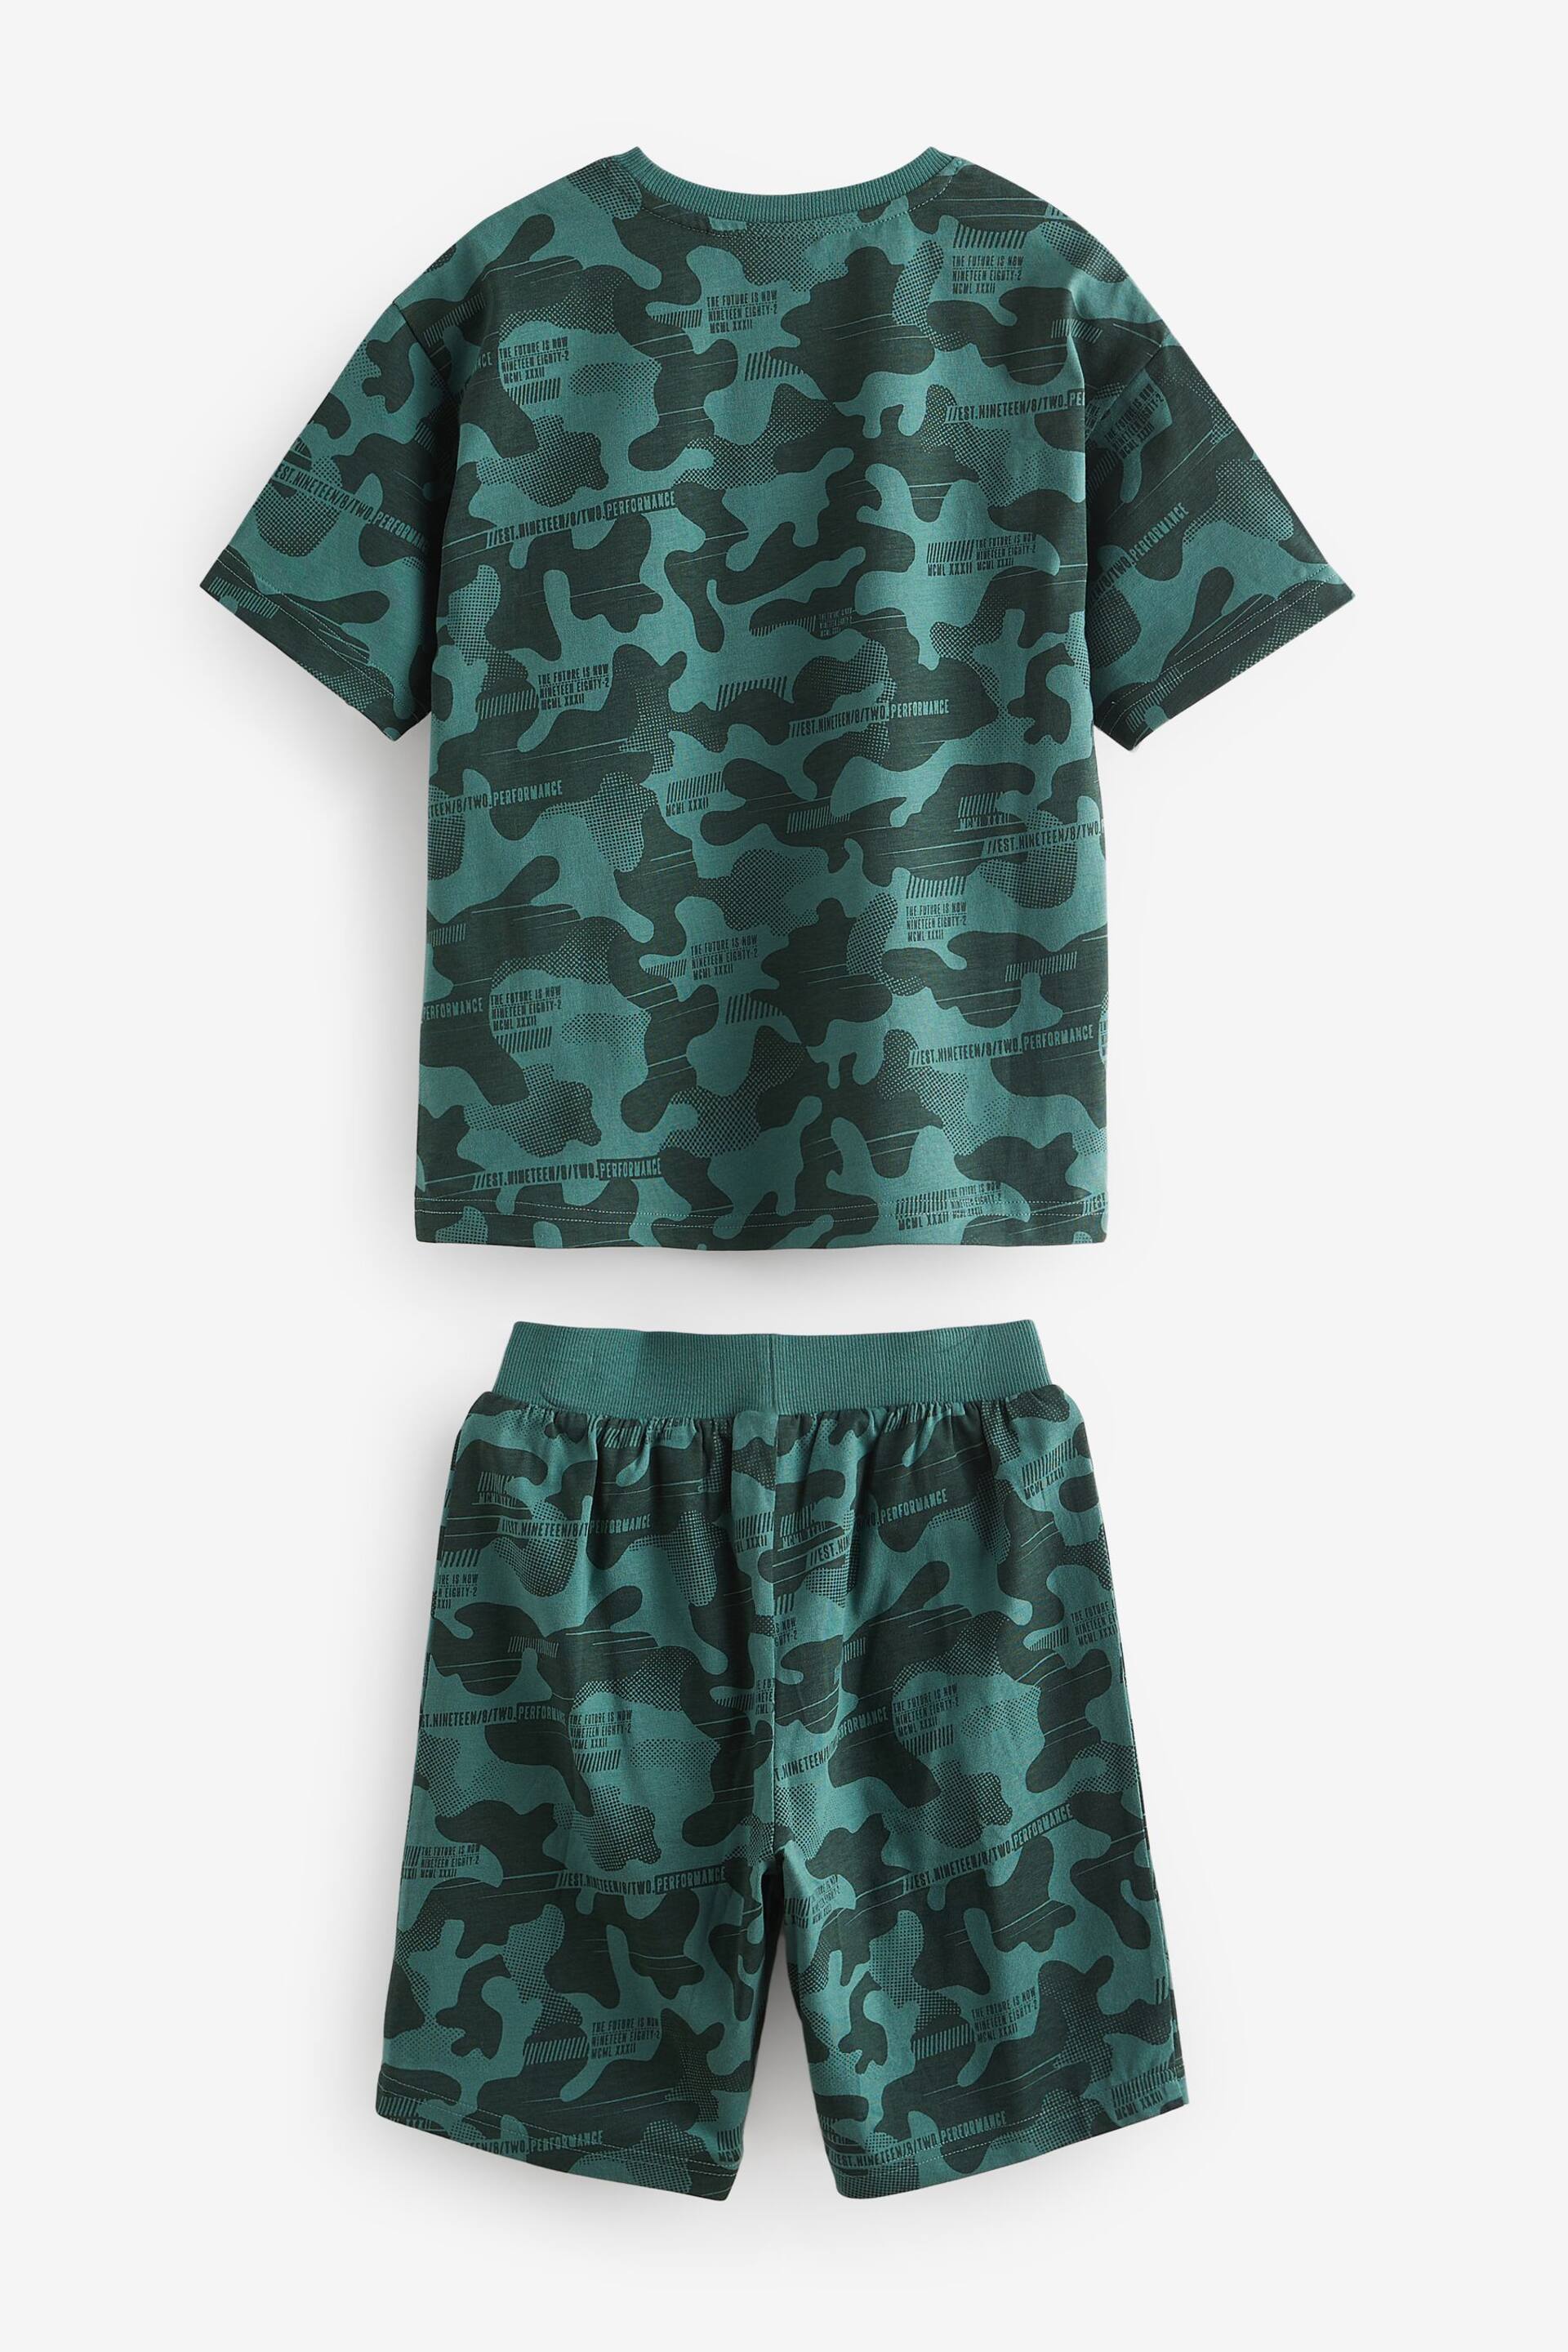 Blue/Grey/Green Camouflage Short Pyjamas 3 Pack (3-16yrs) - Image 3 of 8